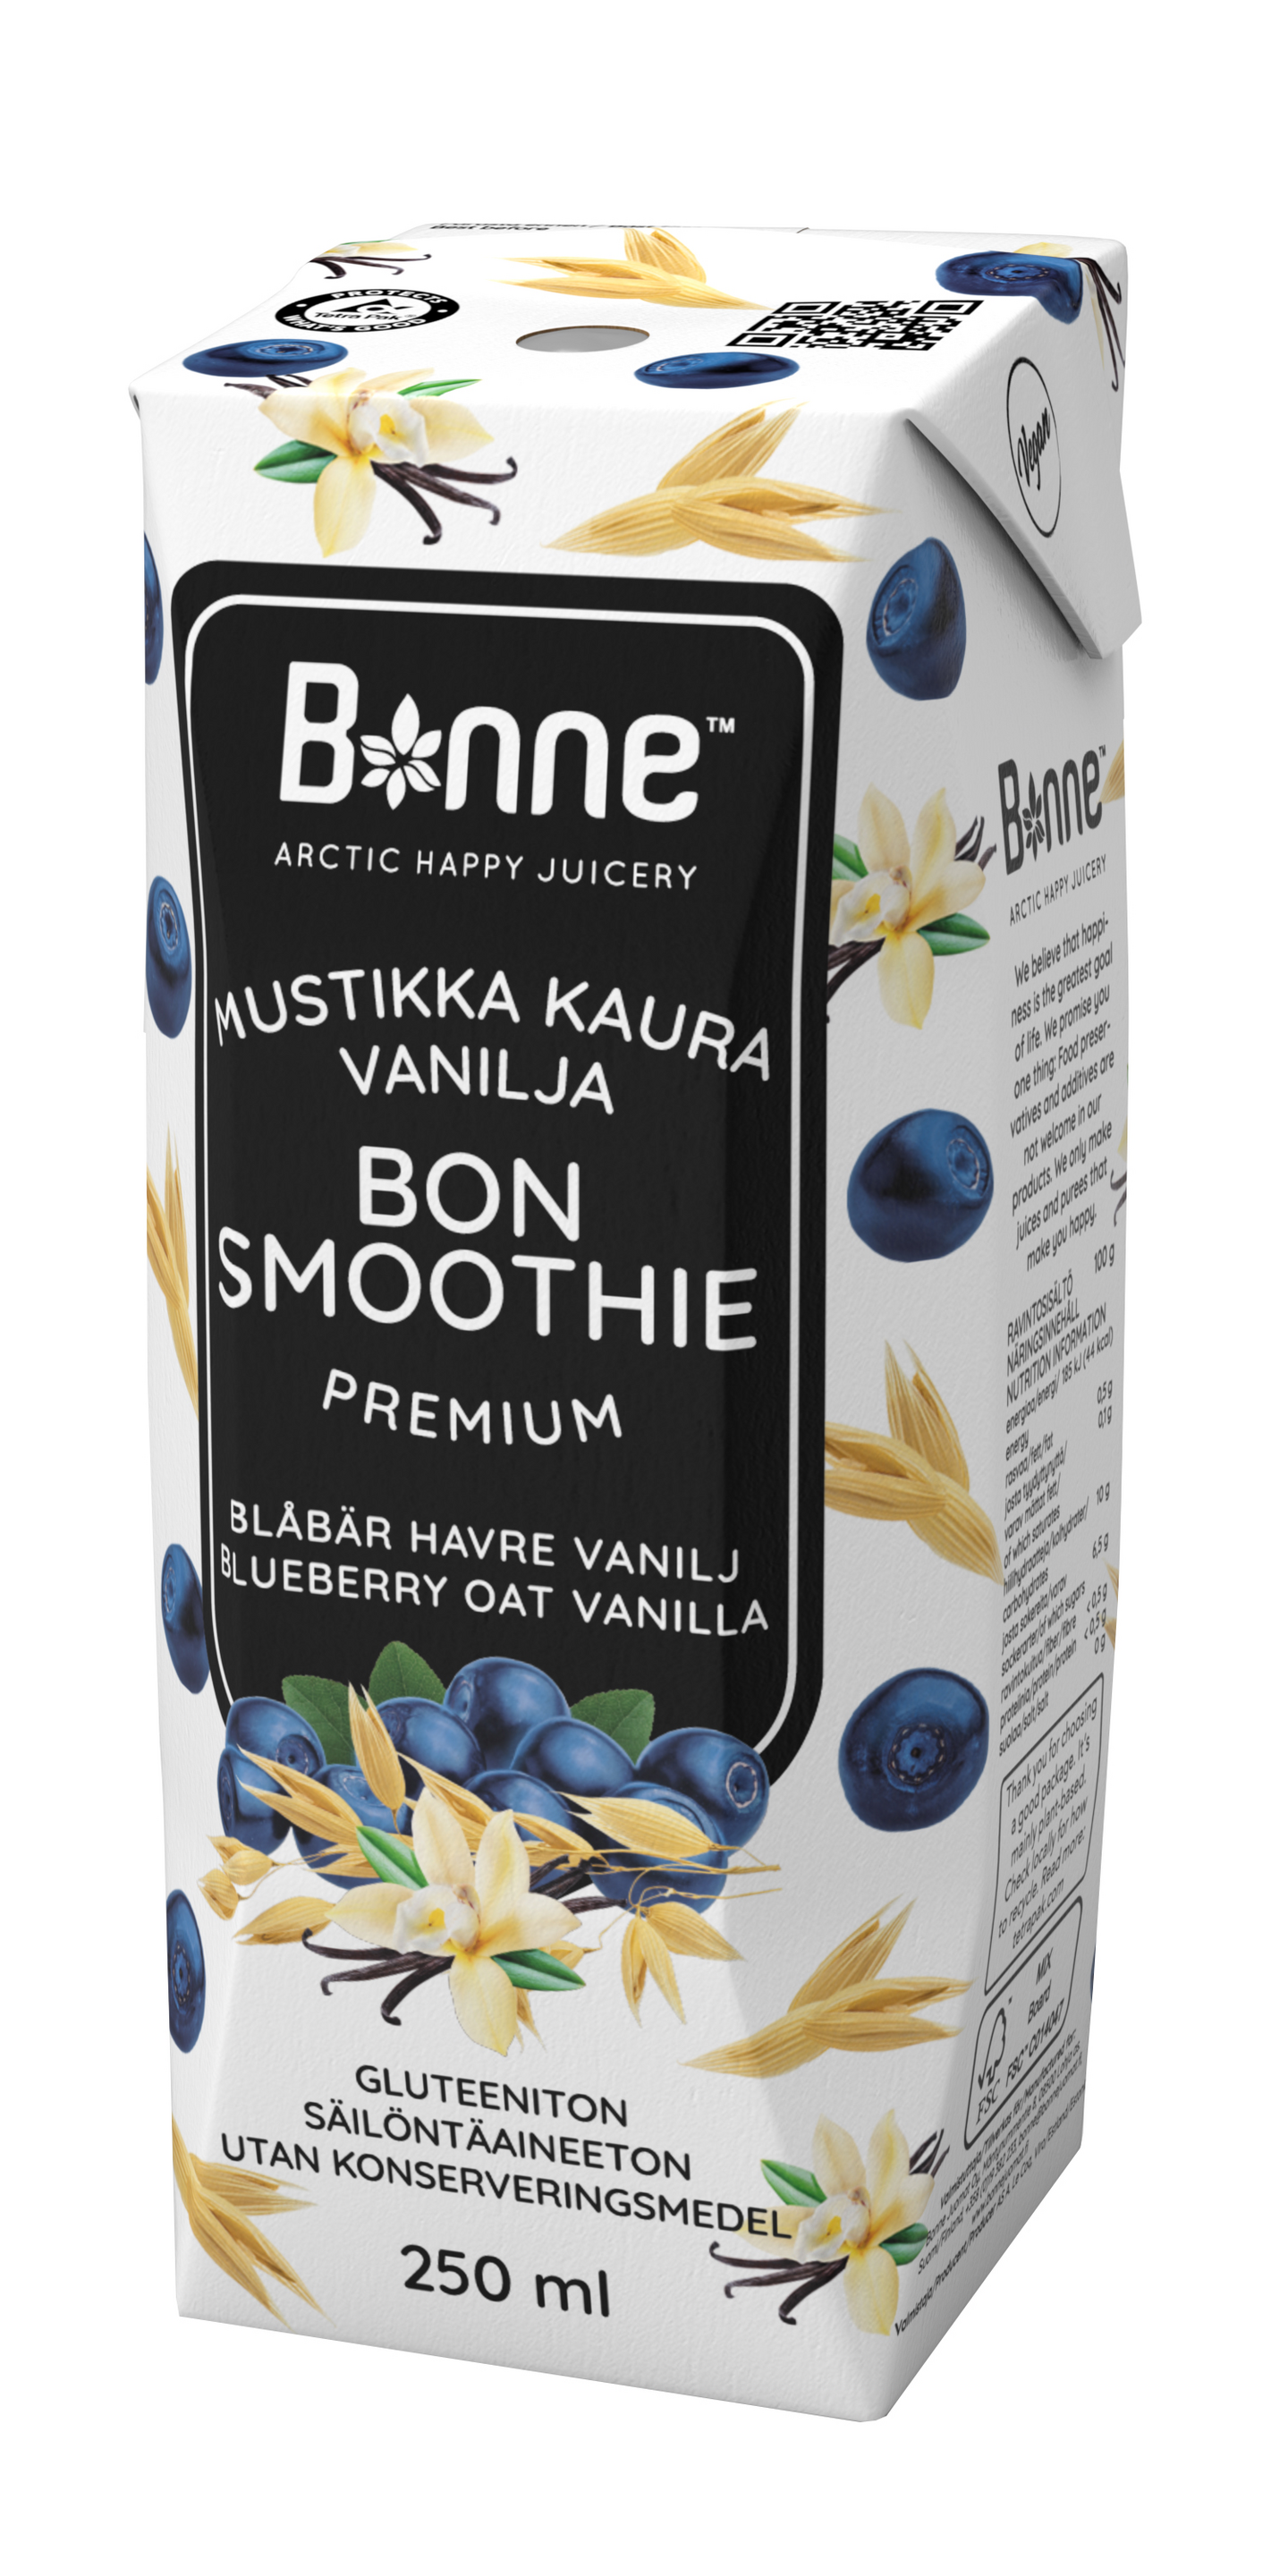 BonSmoothie mustikka-kaura-vanilja 250ml smoothie